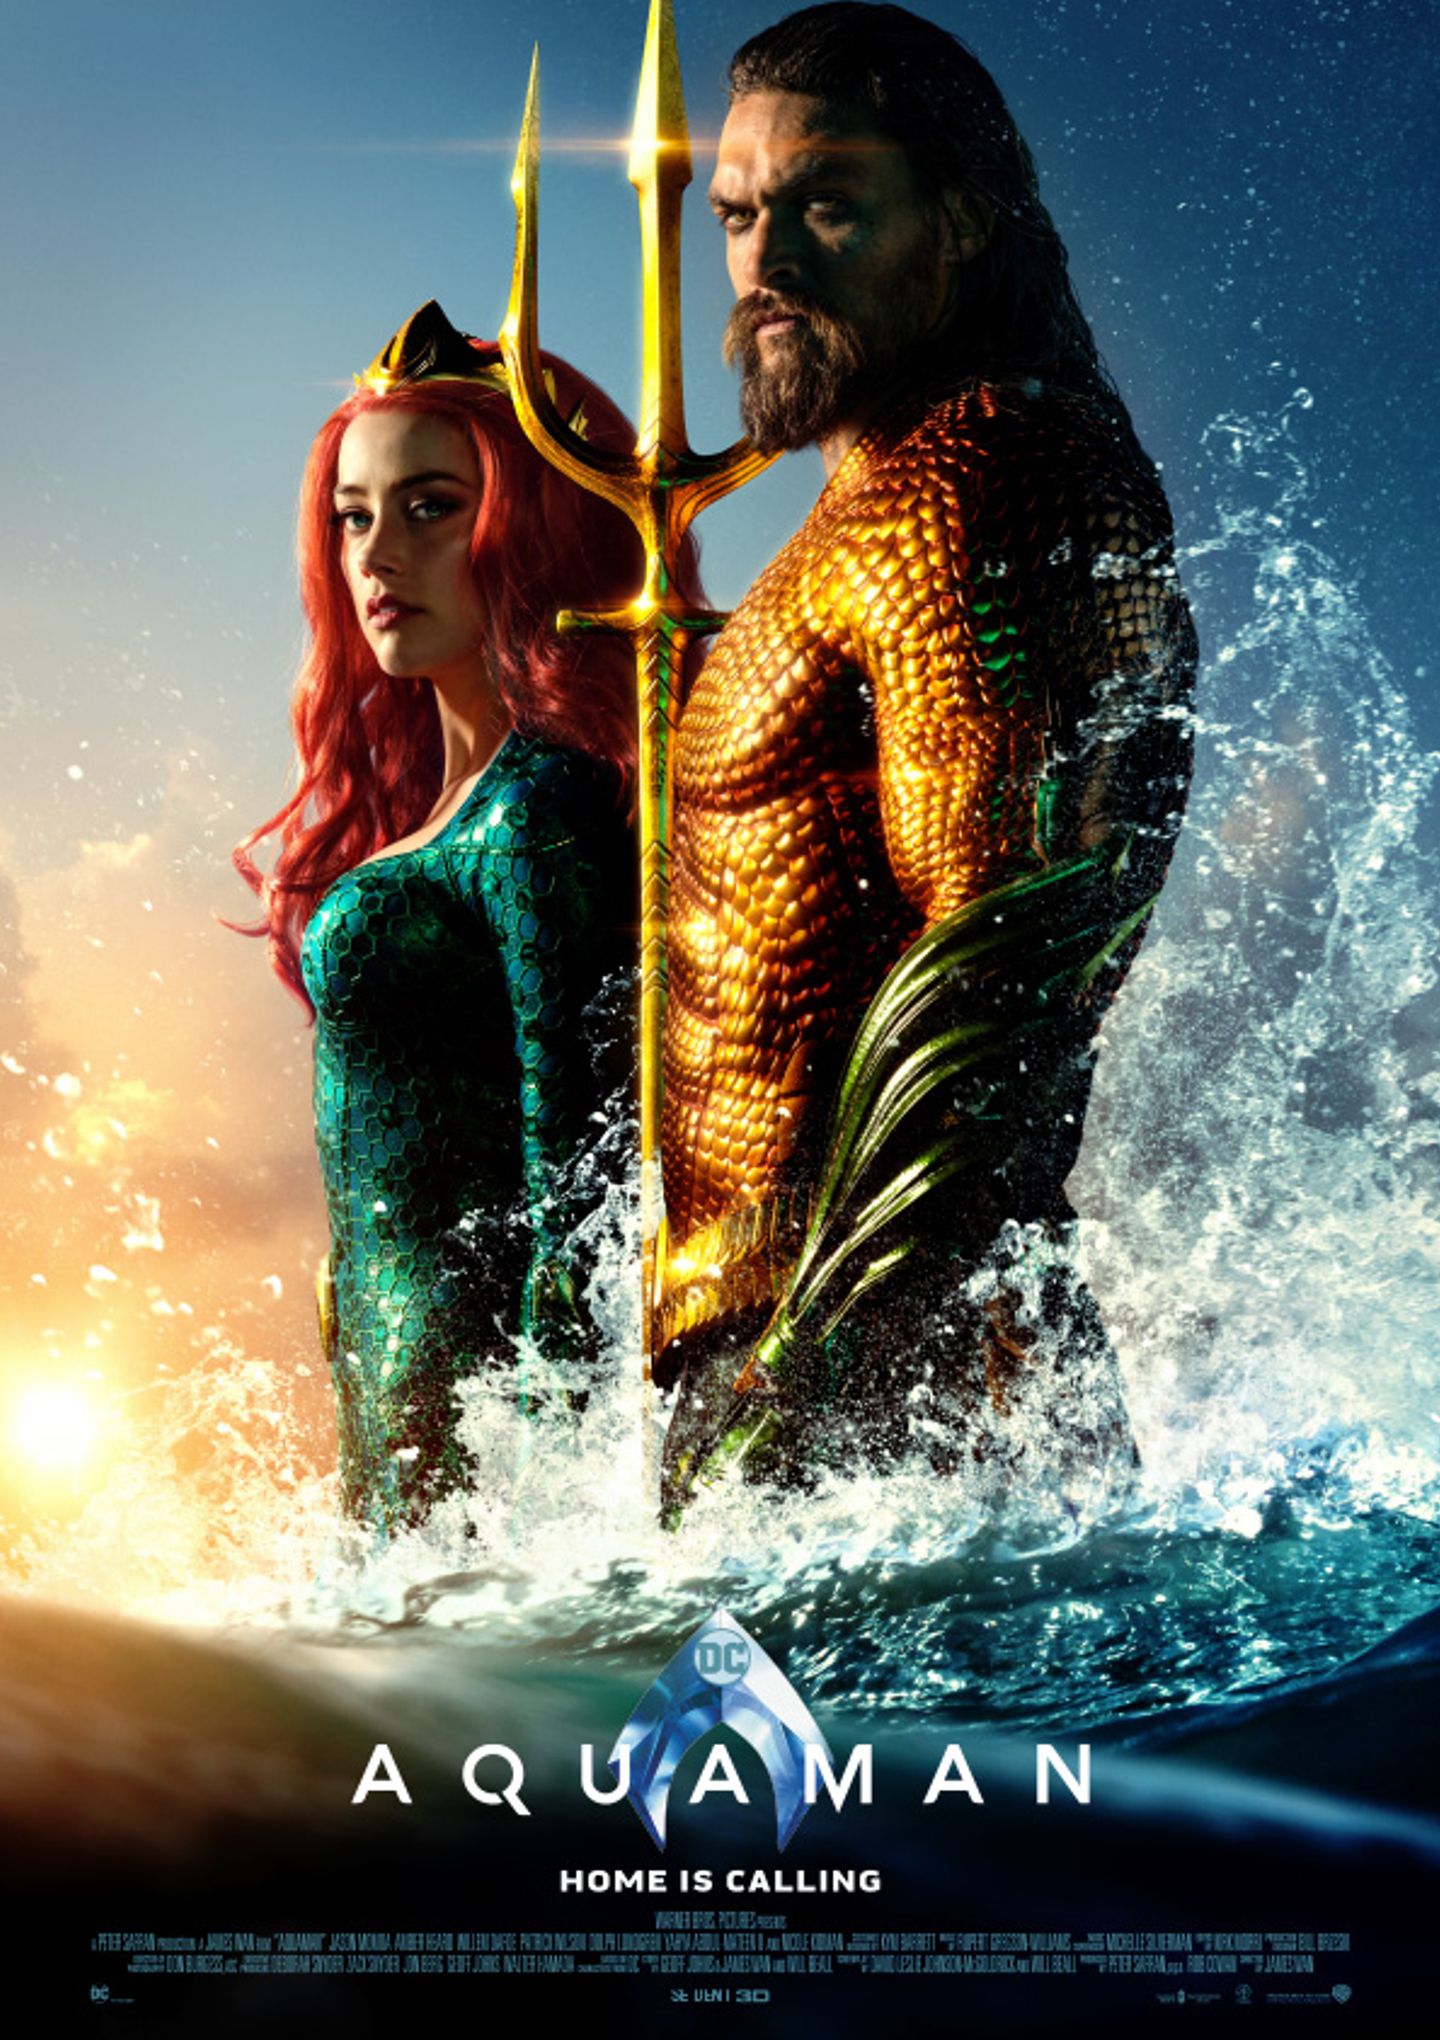 Plakat for 'Aquaman'